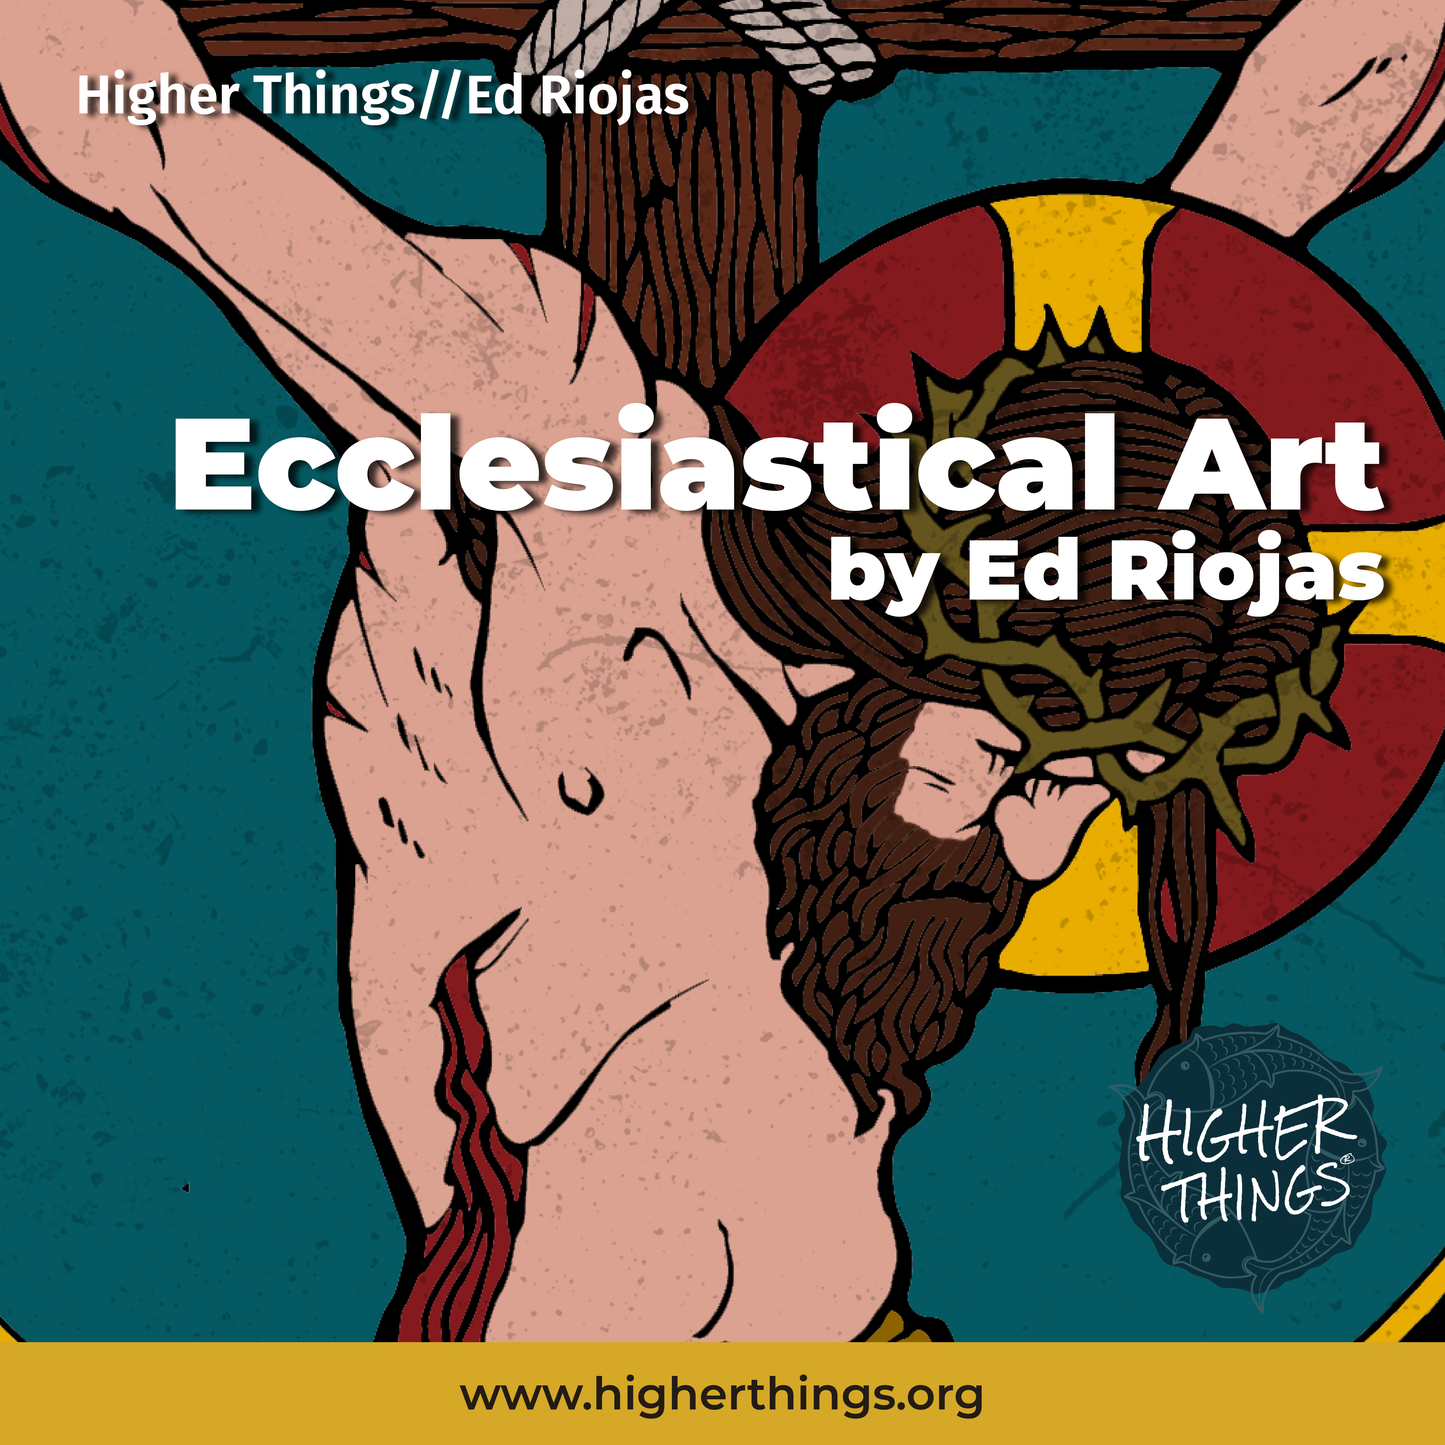 Higher Things Ecclesiastical Art by Ed Riojas